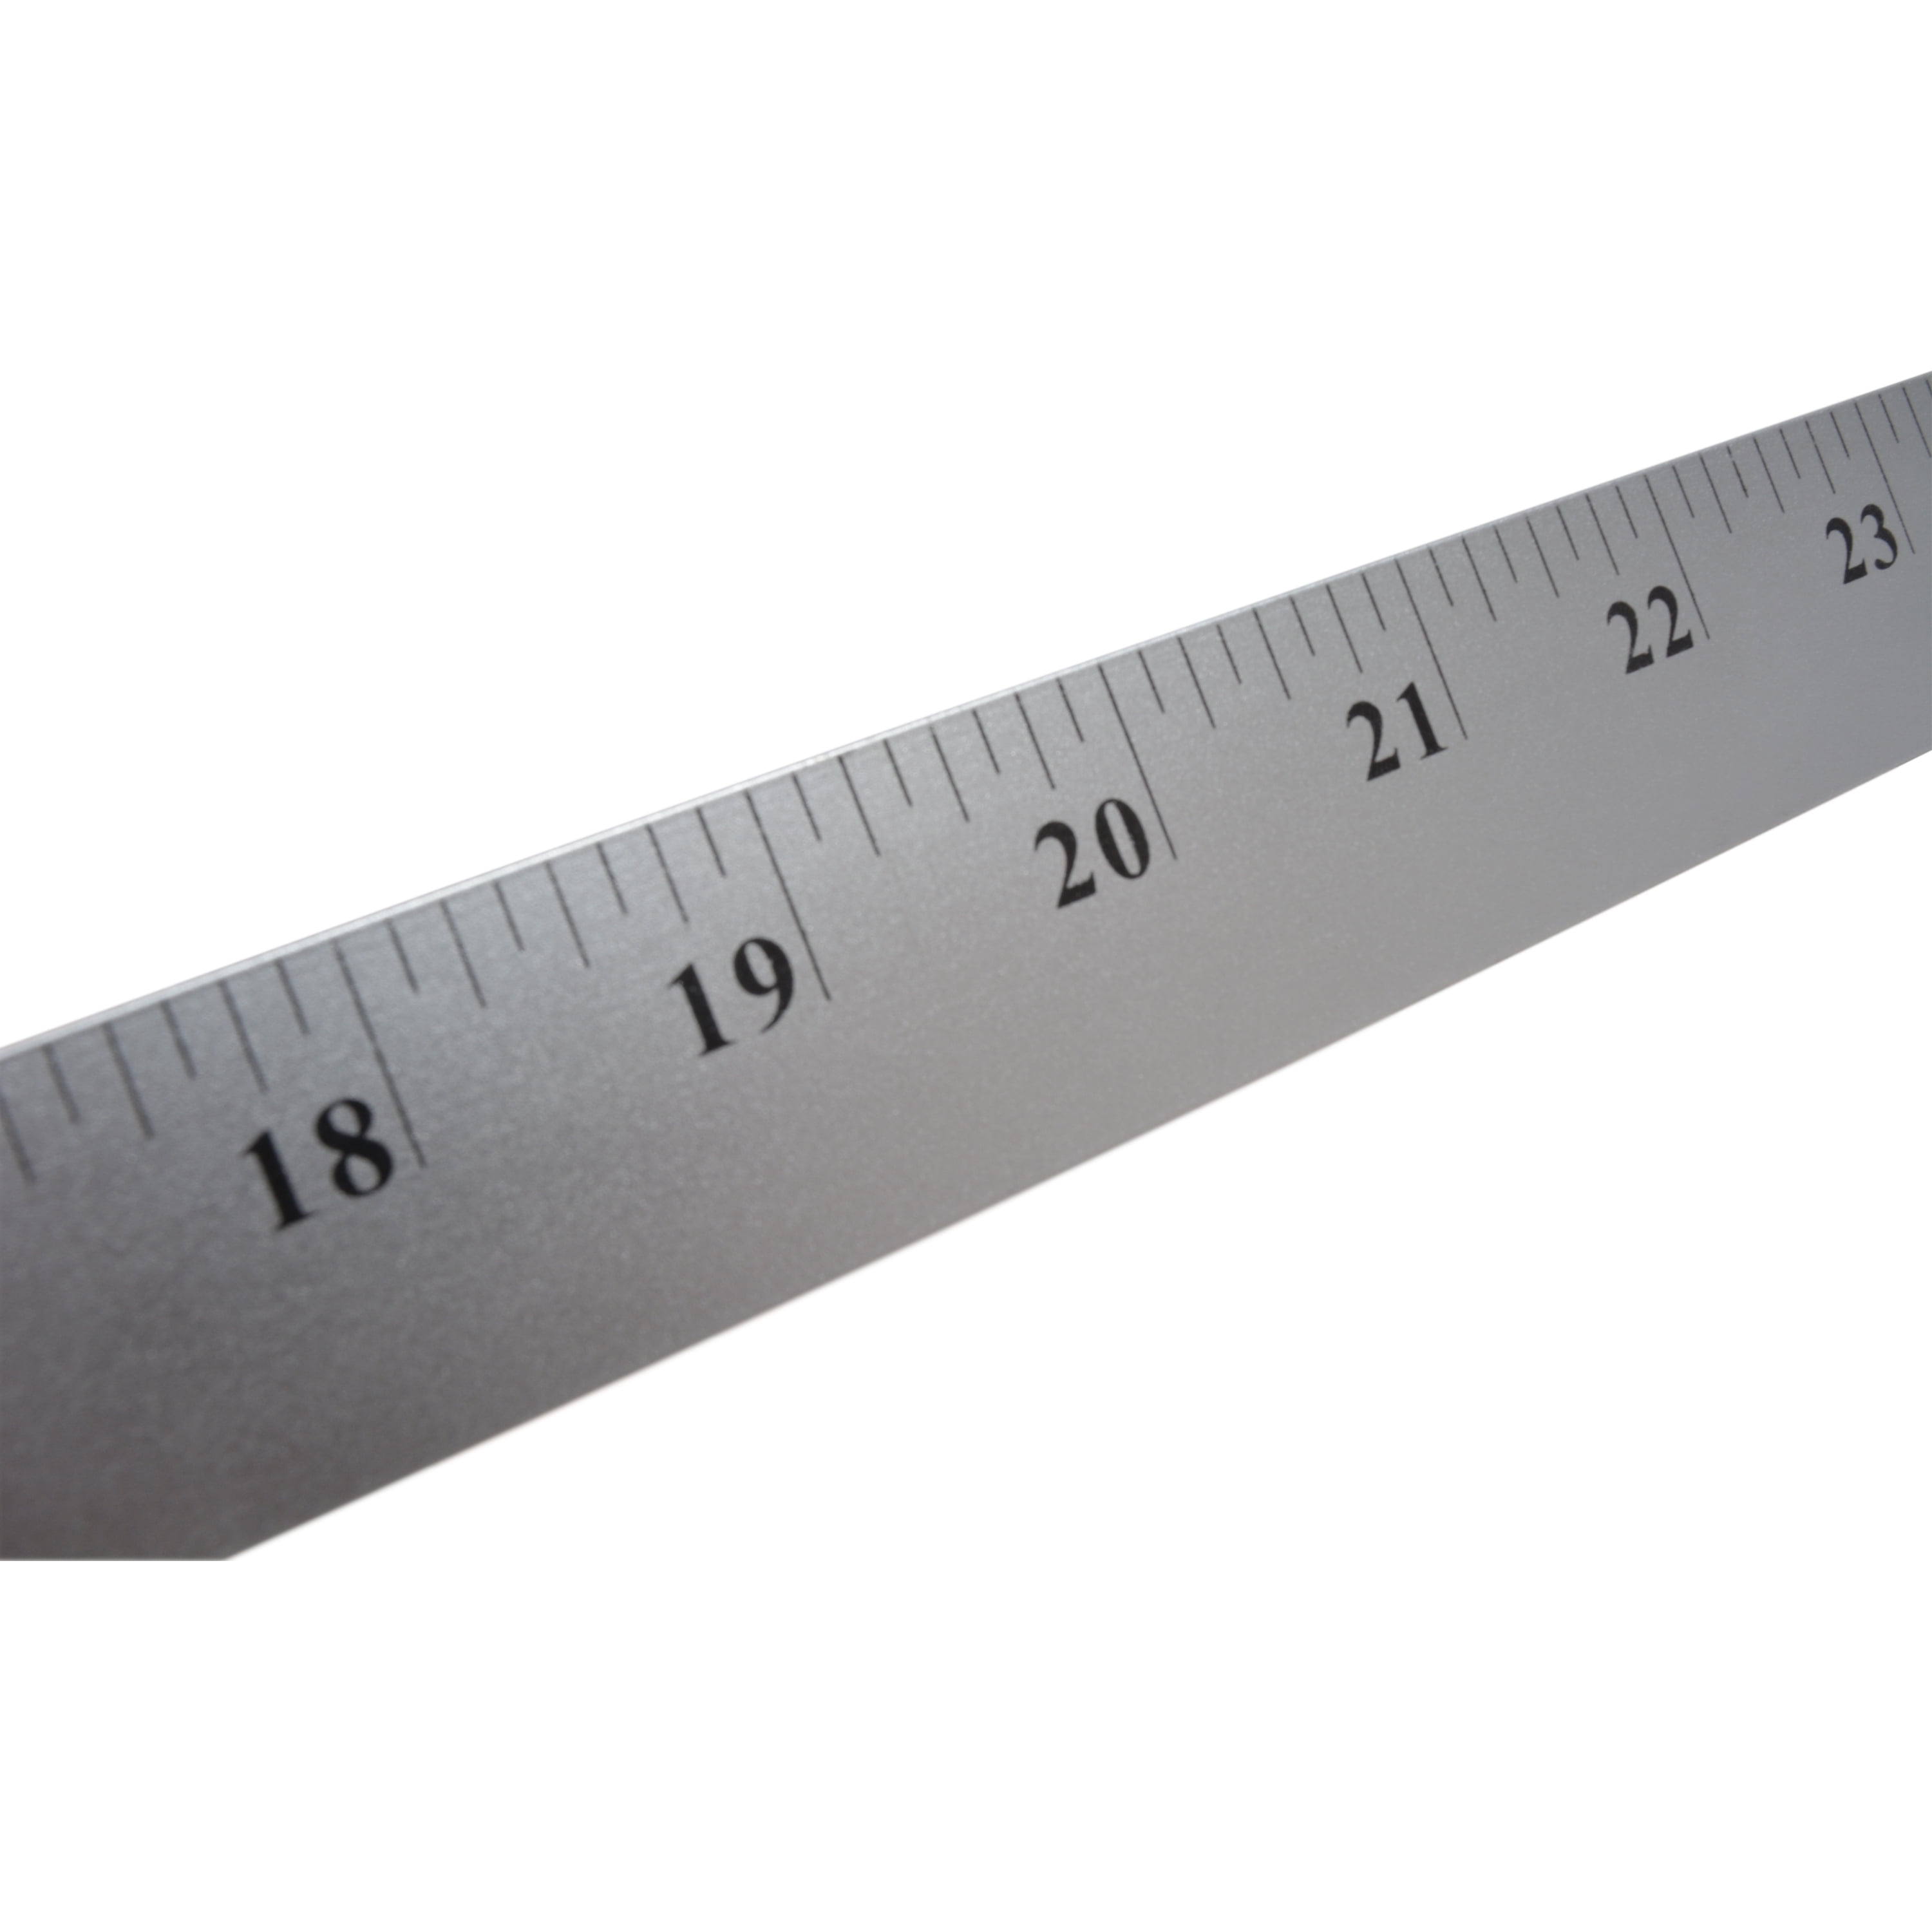 Westcott Wood Yardstick, 36 inch Ruler with Metal Edges 